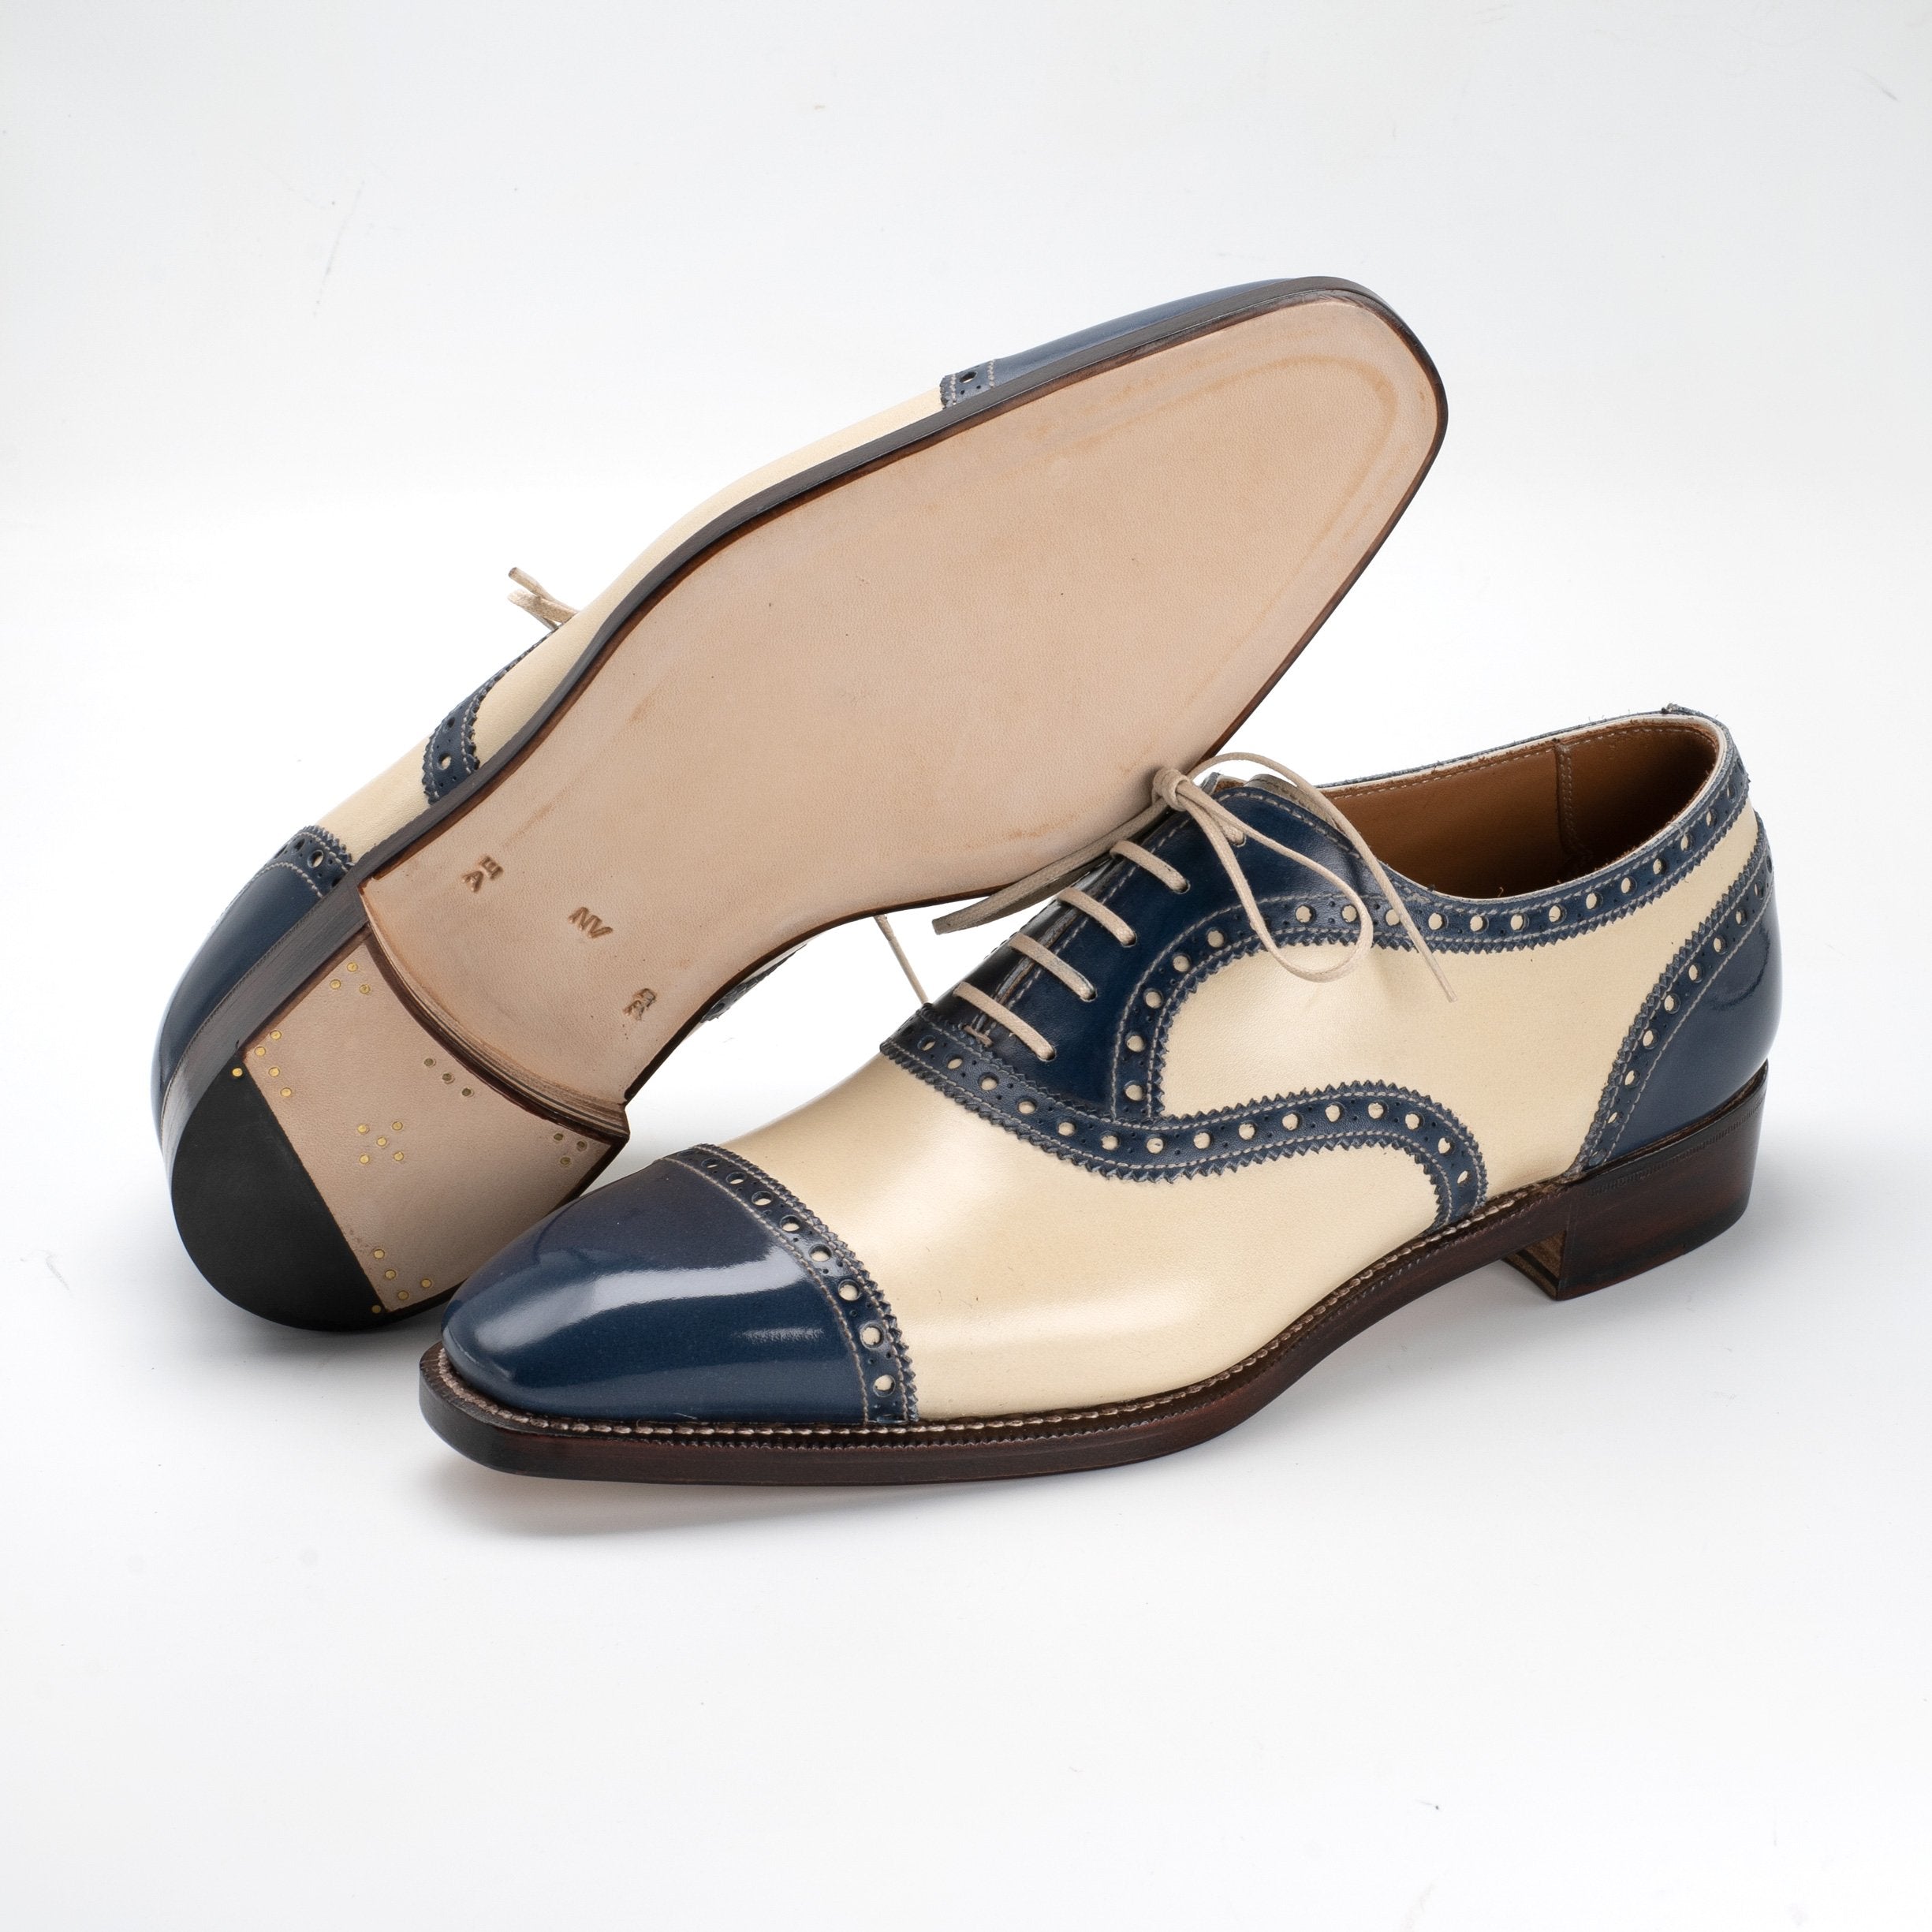 Davis Spectator Oxford Norman Vilalta Bespoke Shoemakers and Leffot Collaboration